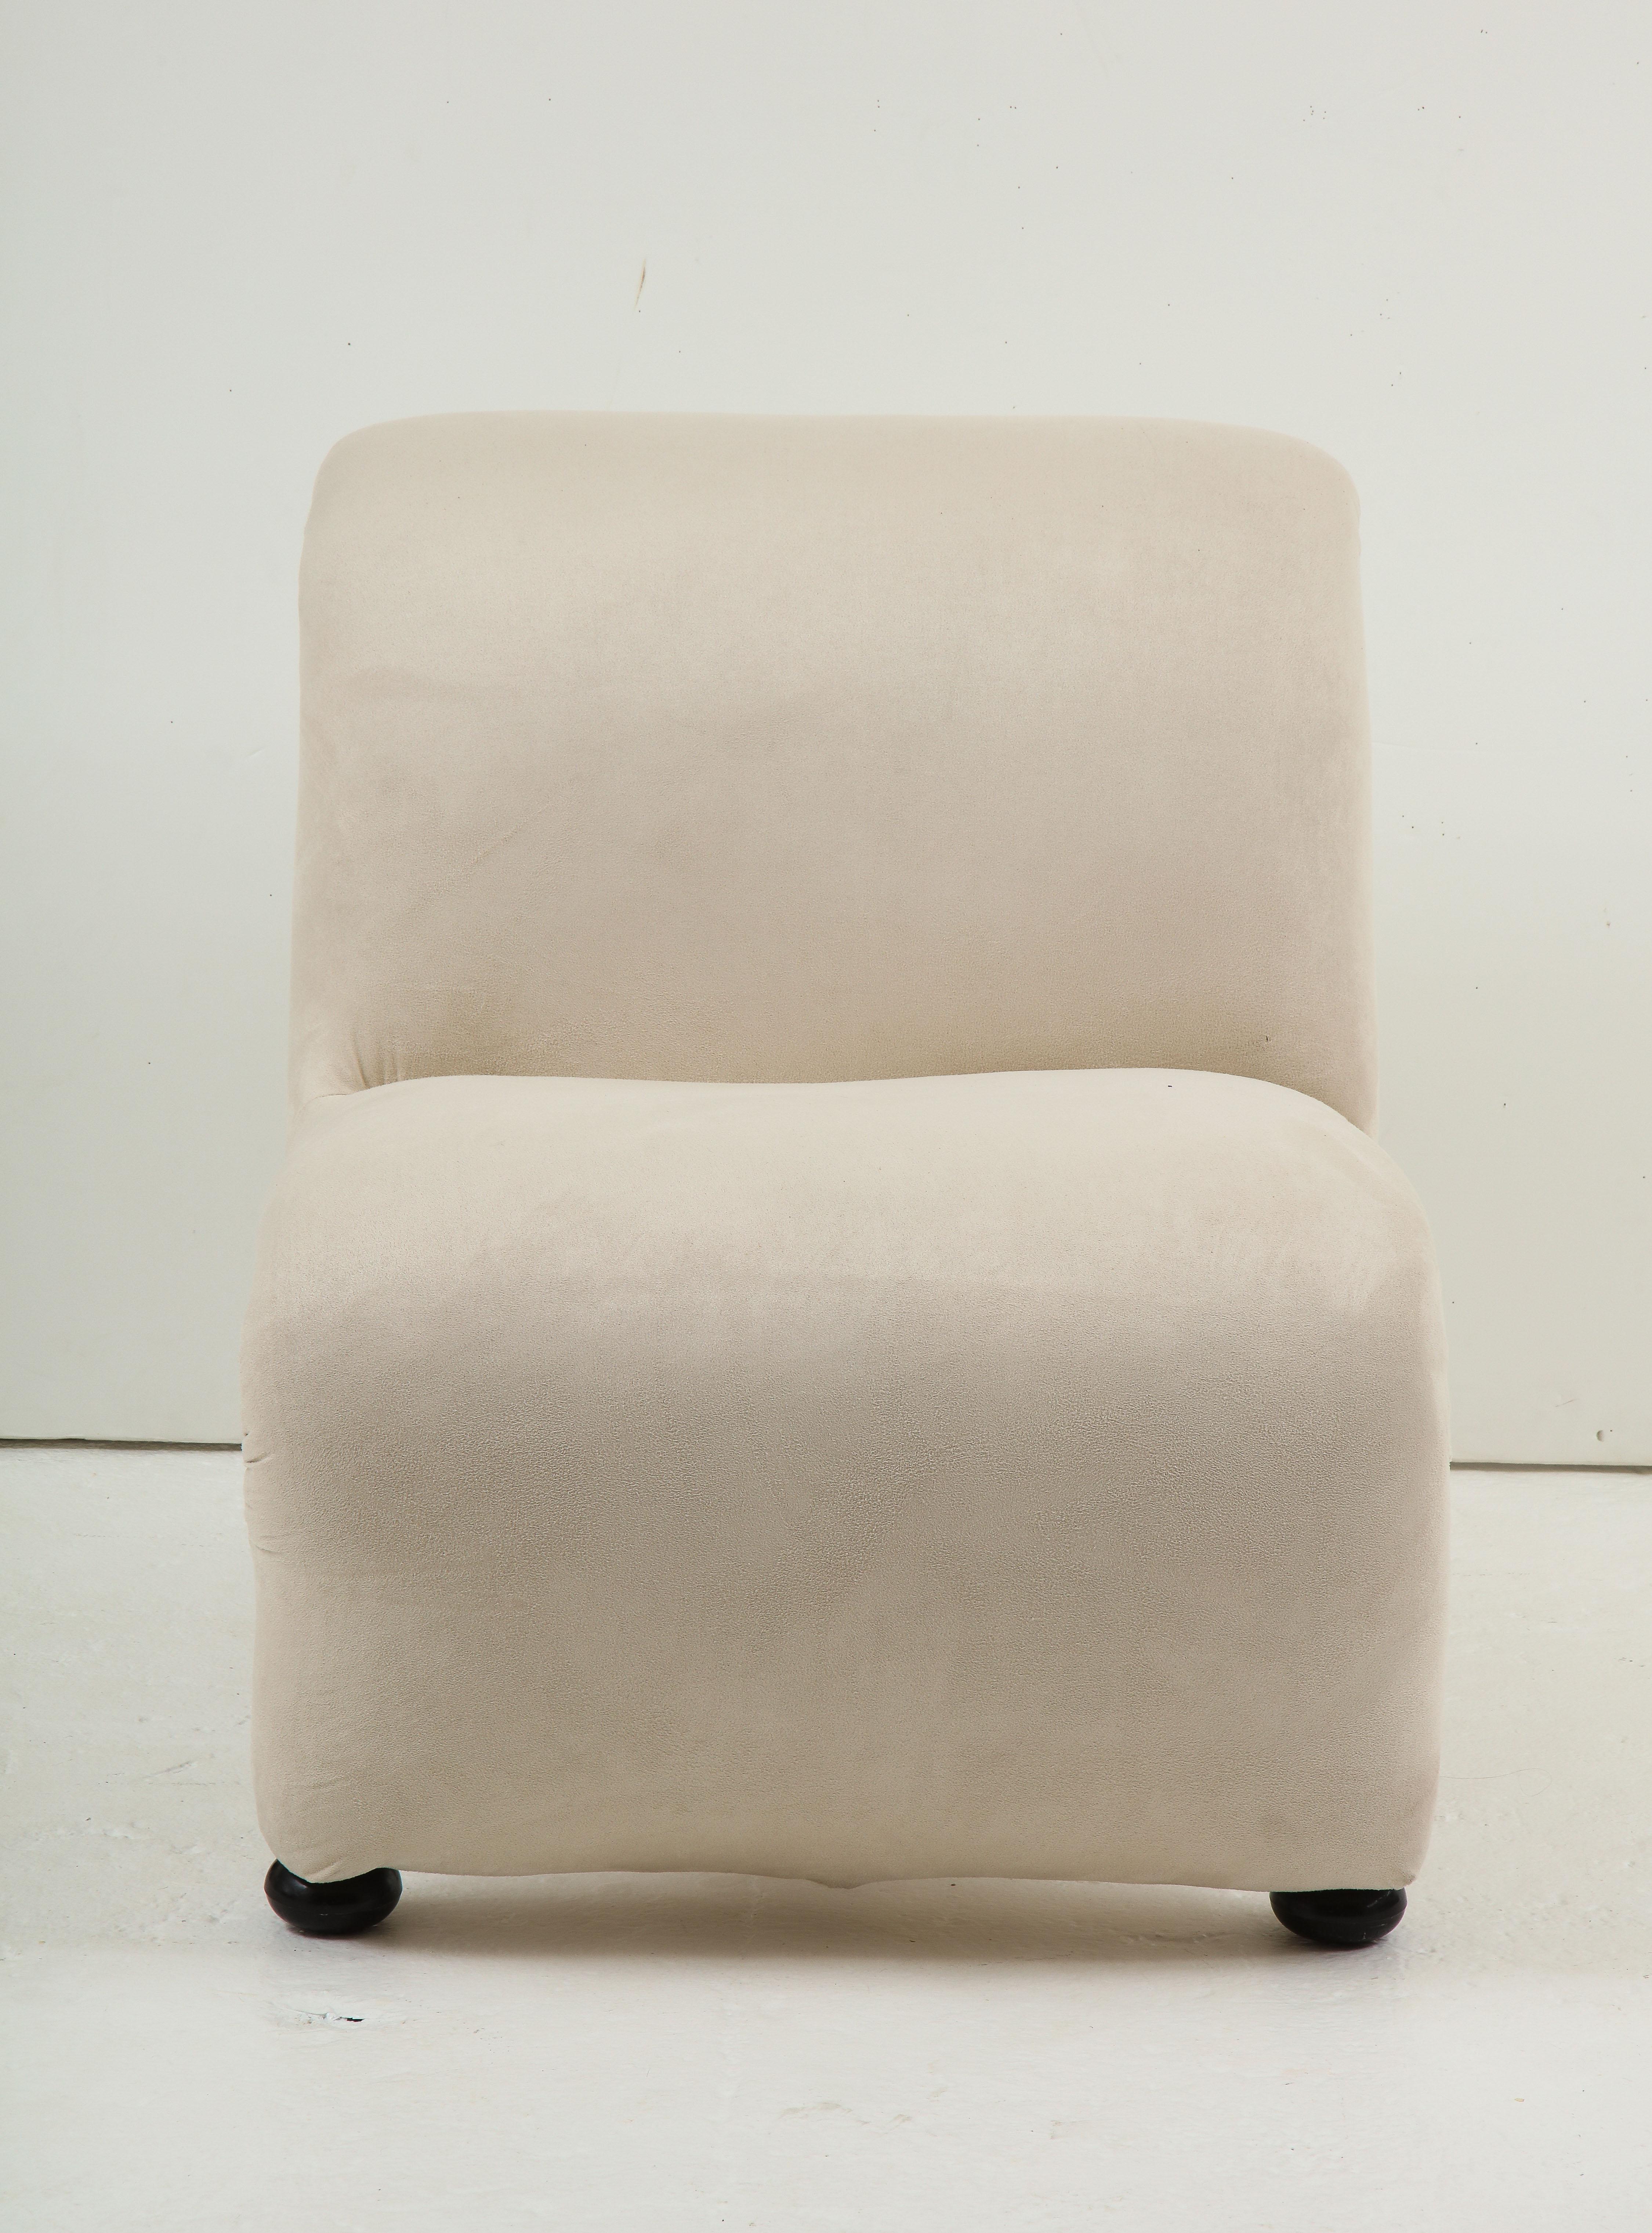 20th Century Sculptural Etienne Fermigier Lounge Chairs, White, 1970s, France